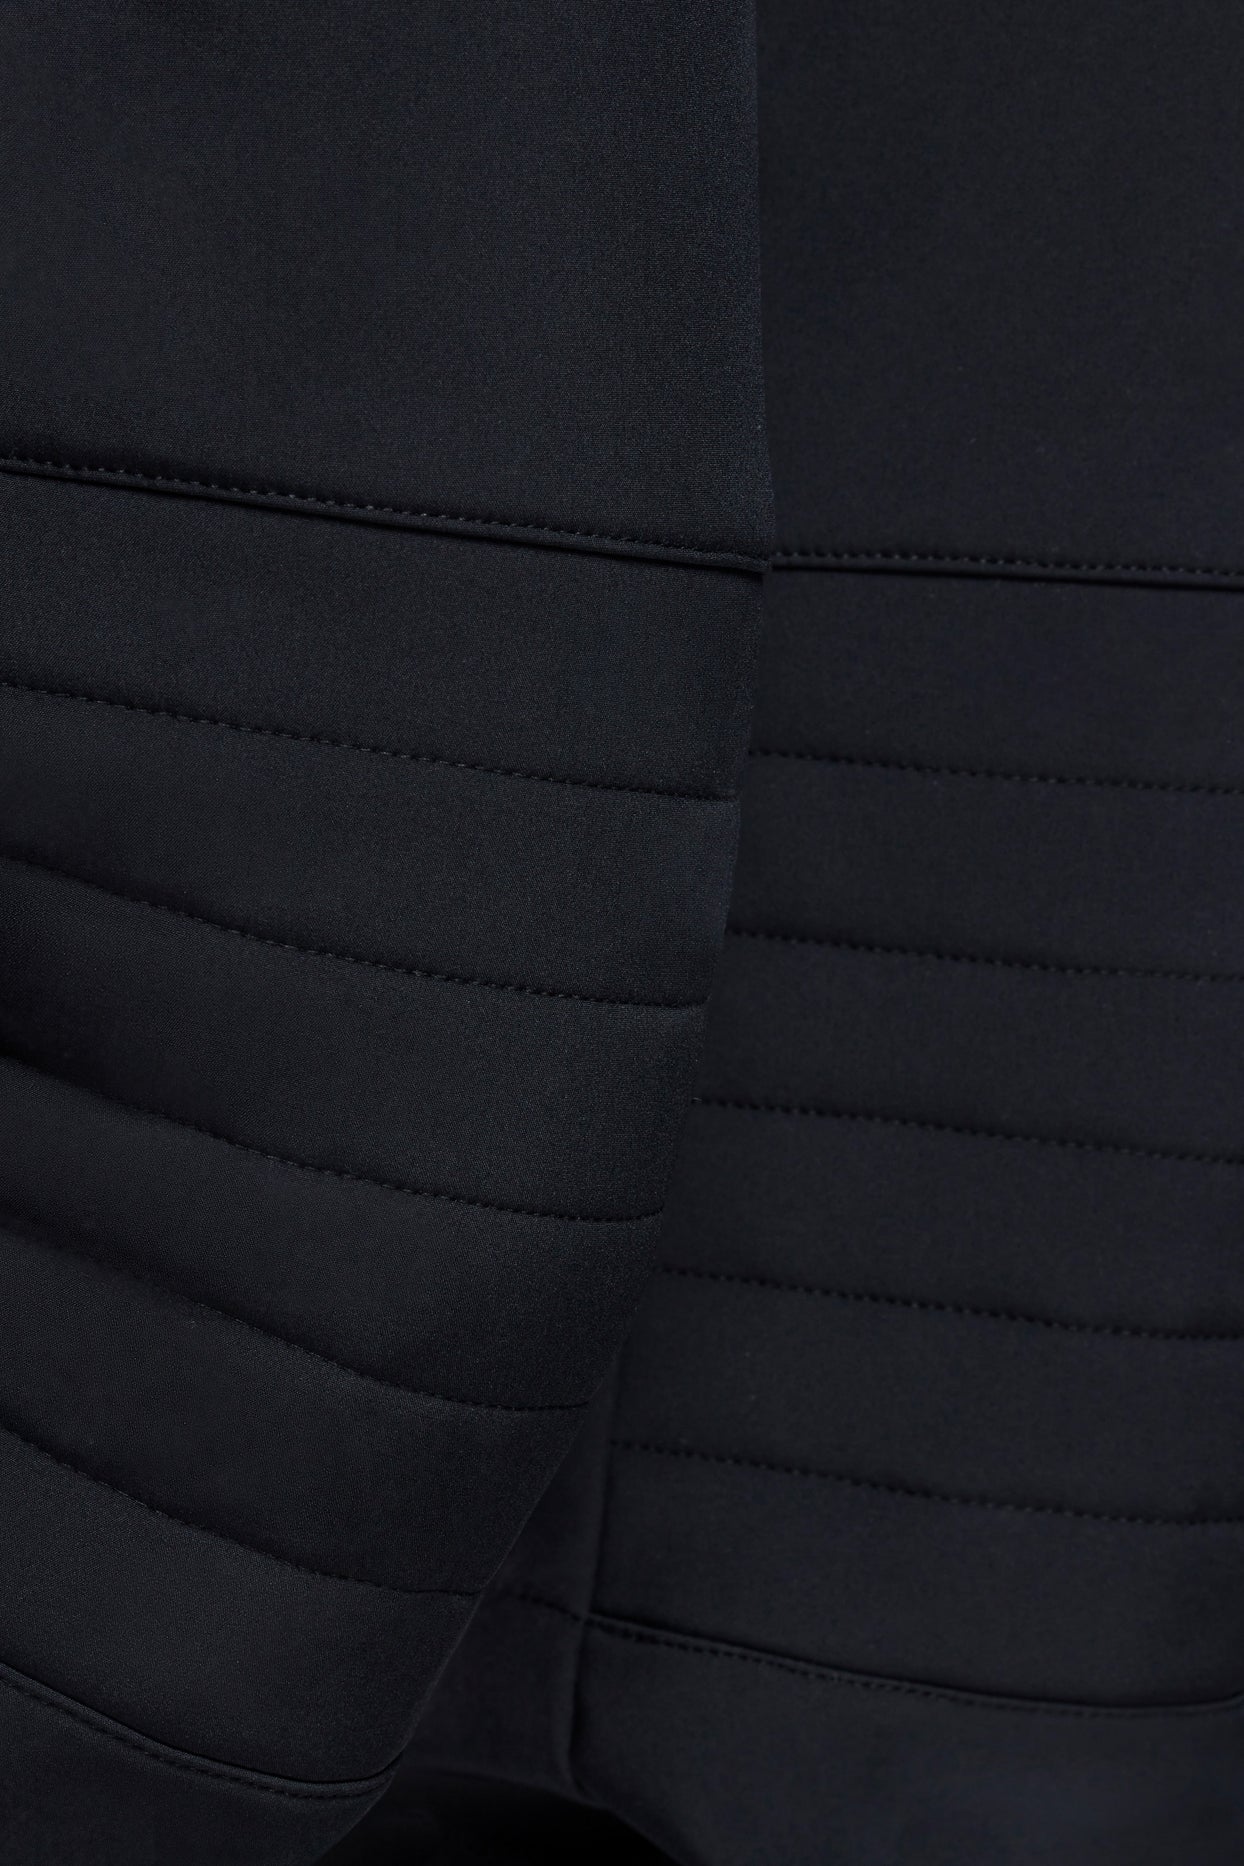 Fleece Lined Ski Pants in Black